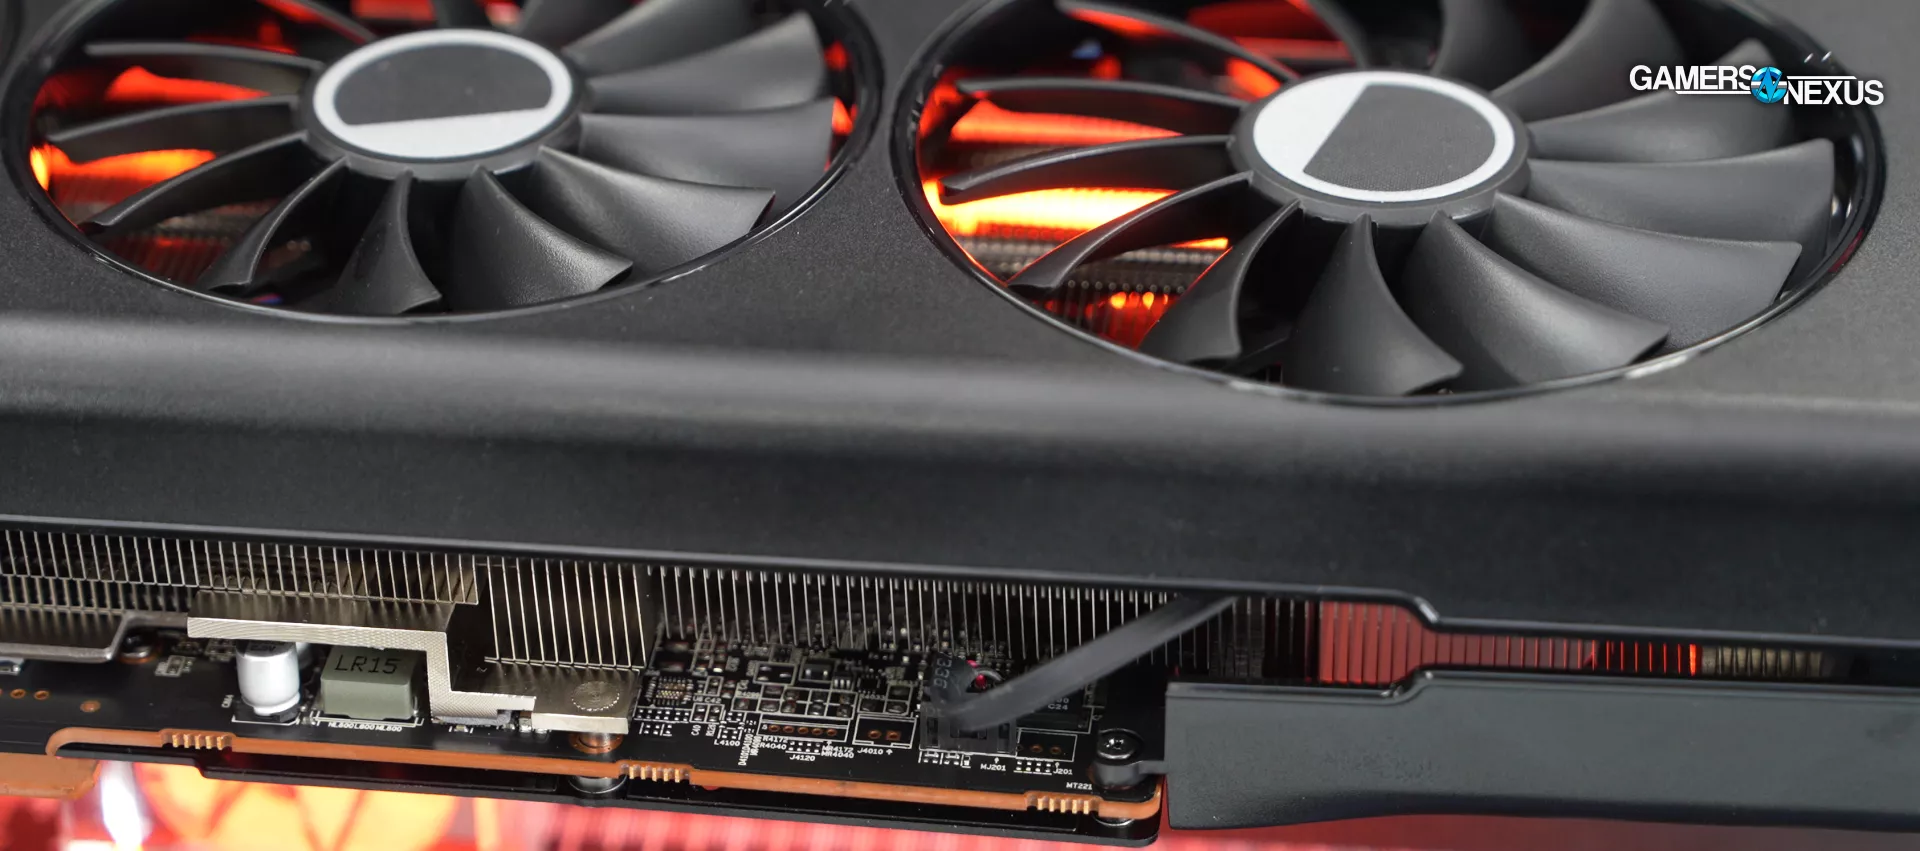 AMD Radeon RX 7700 XT price drops to under $400, finally